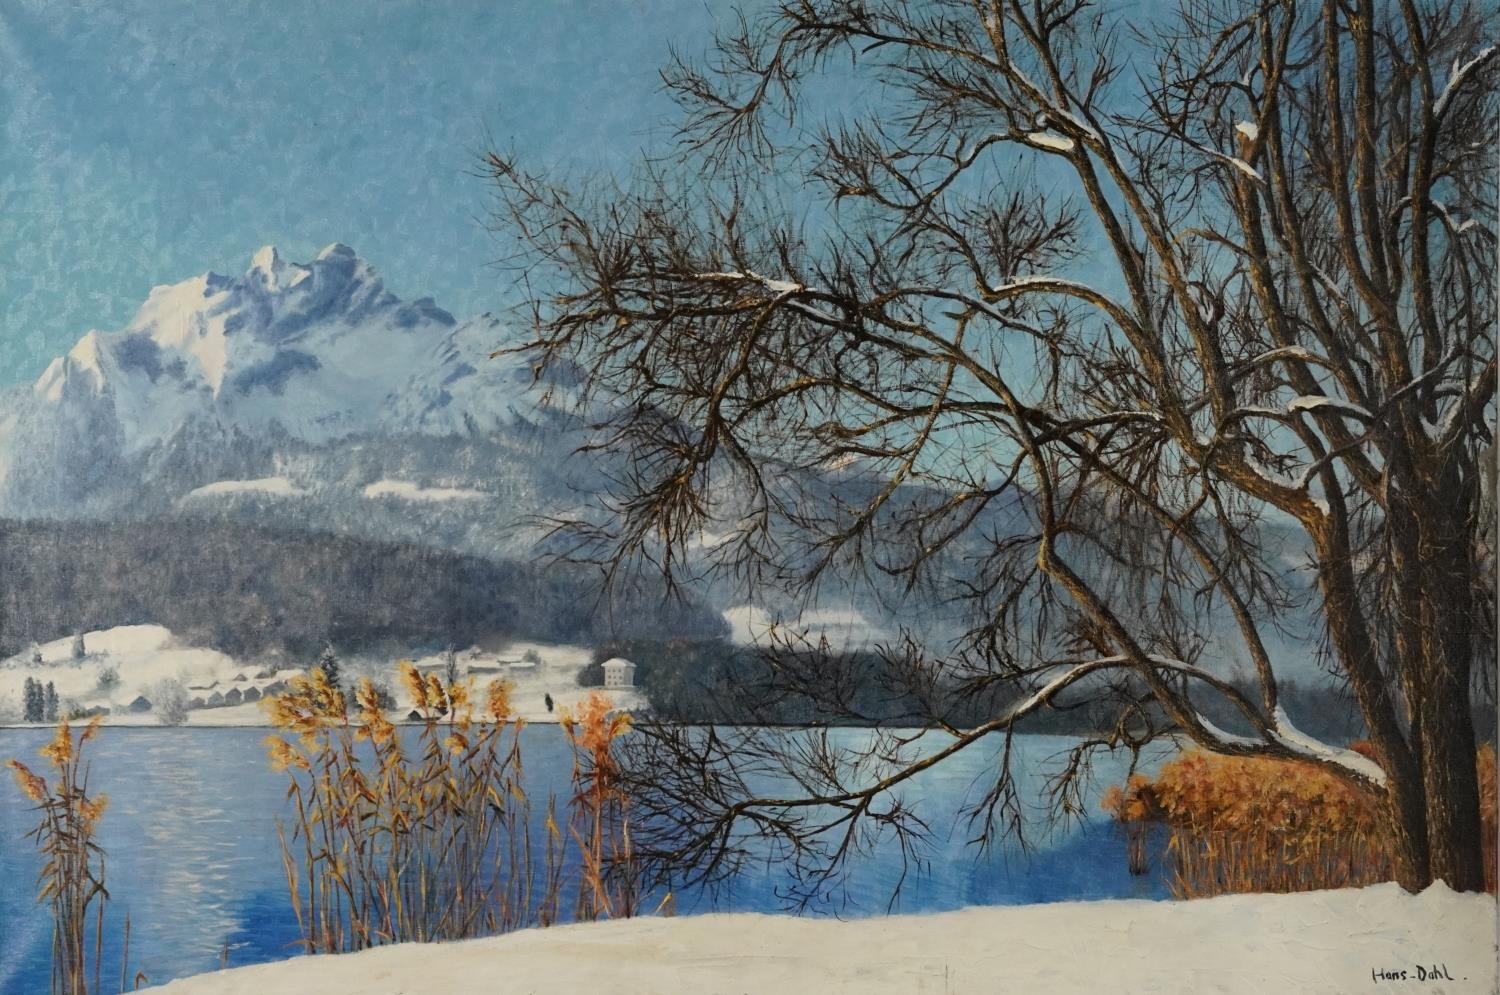 Manner of Hans Dahl - Mountainous winter landscape with lake, oil on canvas, unframed, 100cm x 65cm